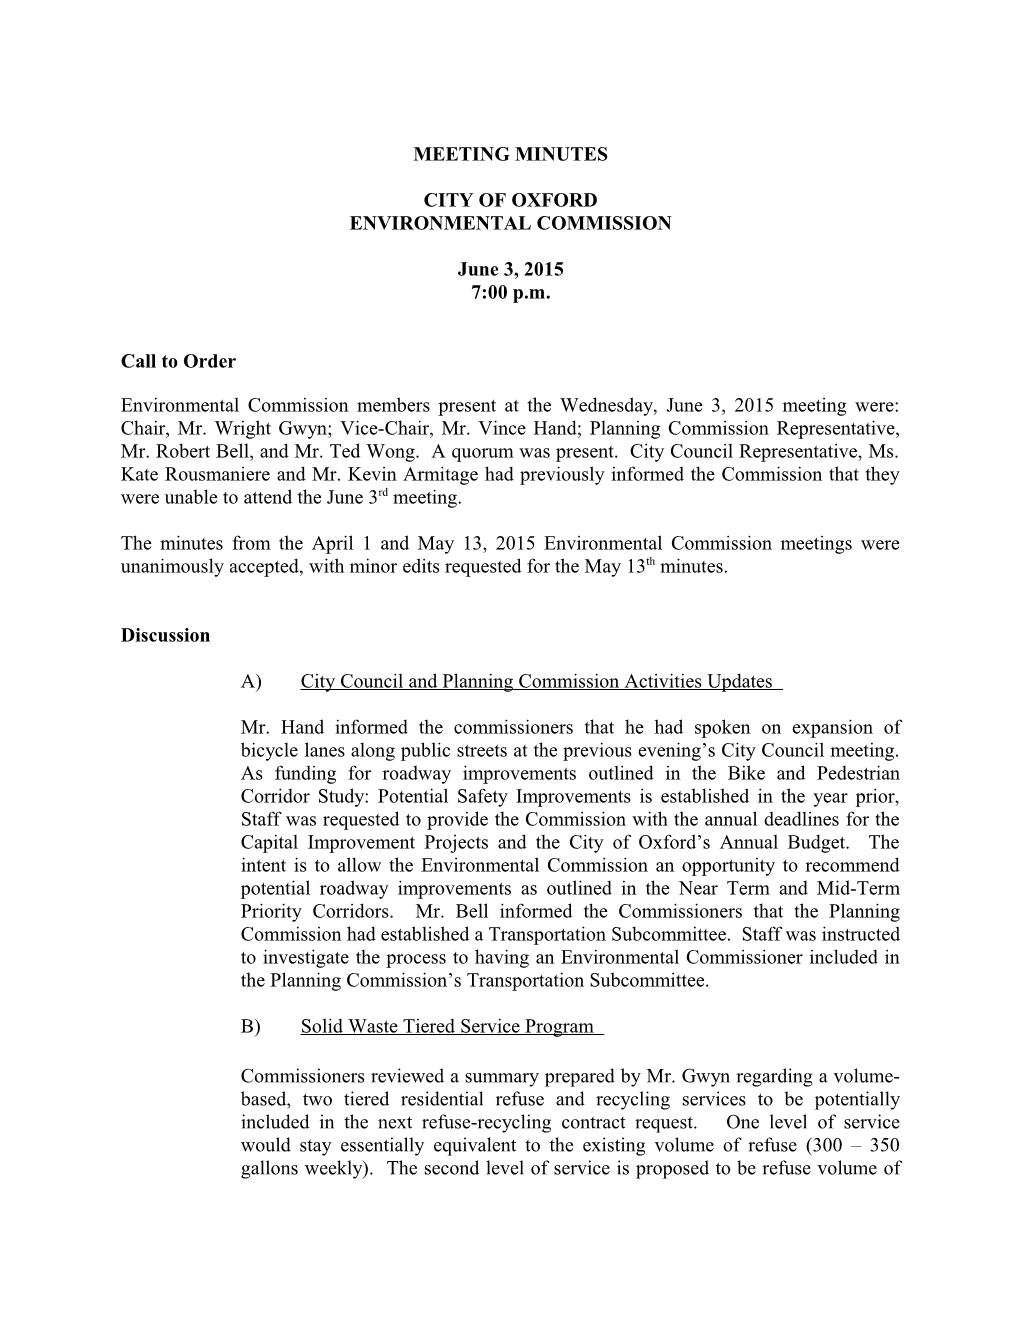 Environmental Commission Minutespage 1